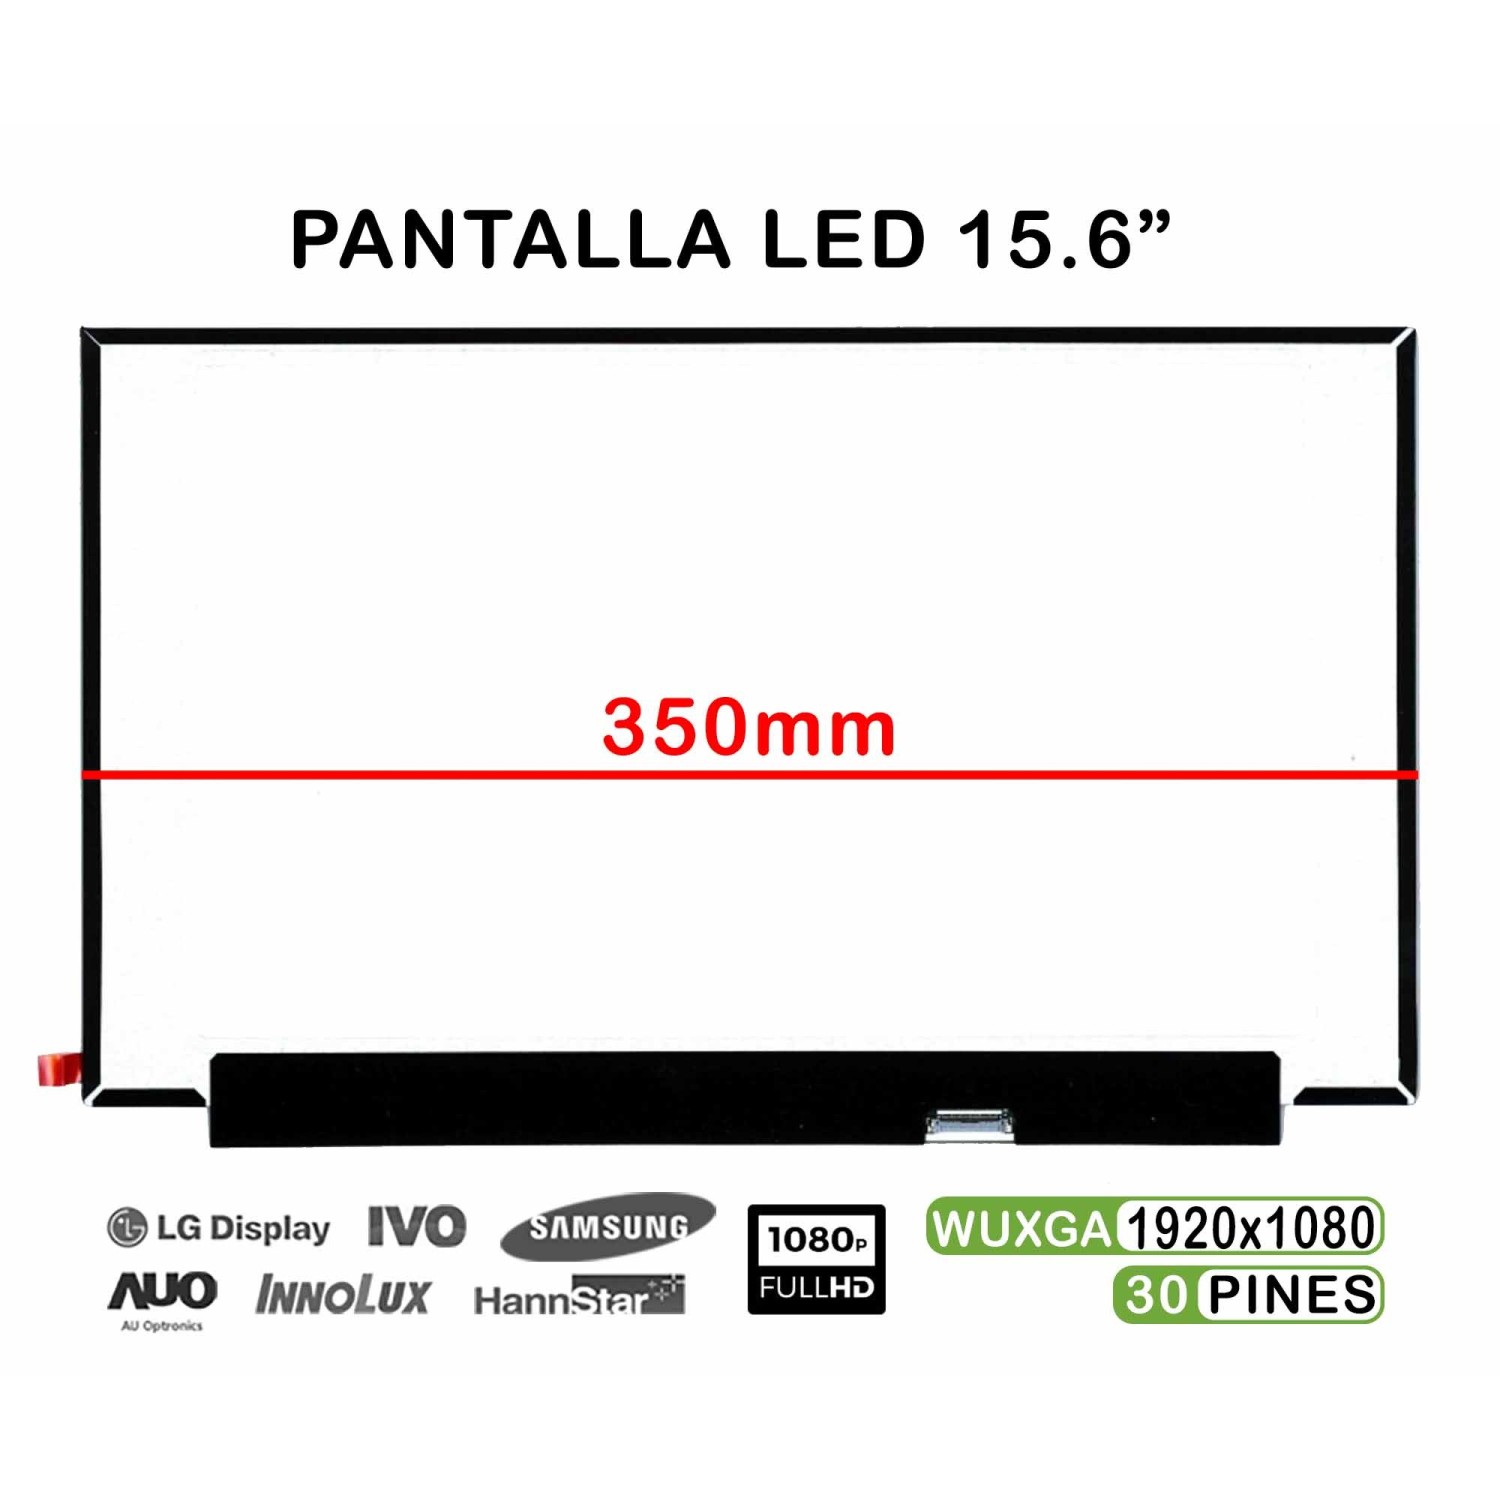 PANTALLA LED DE 15.6" PARA PORTÁTIL LENOVO IDEAPAD 330S-15IKB 81F5 350MM